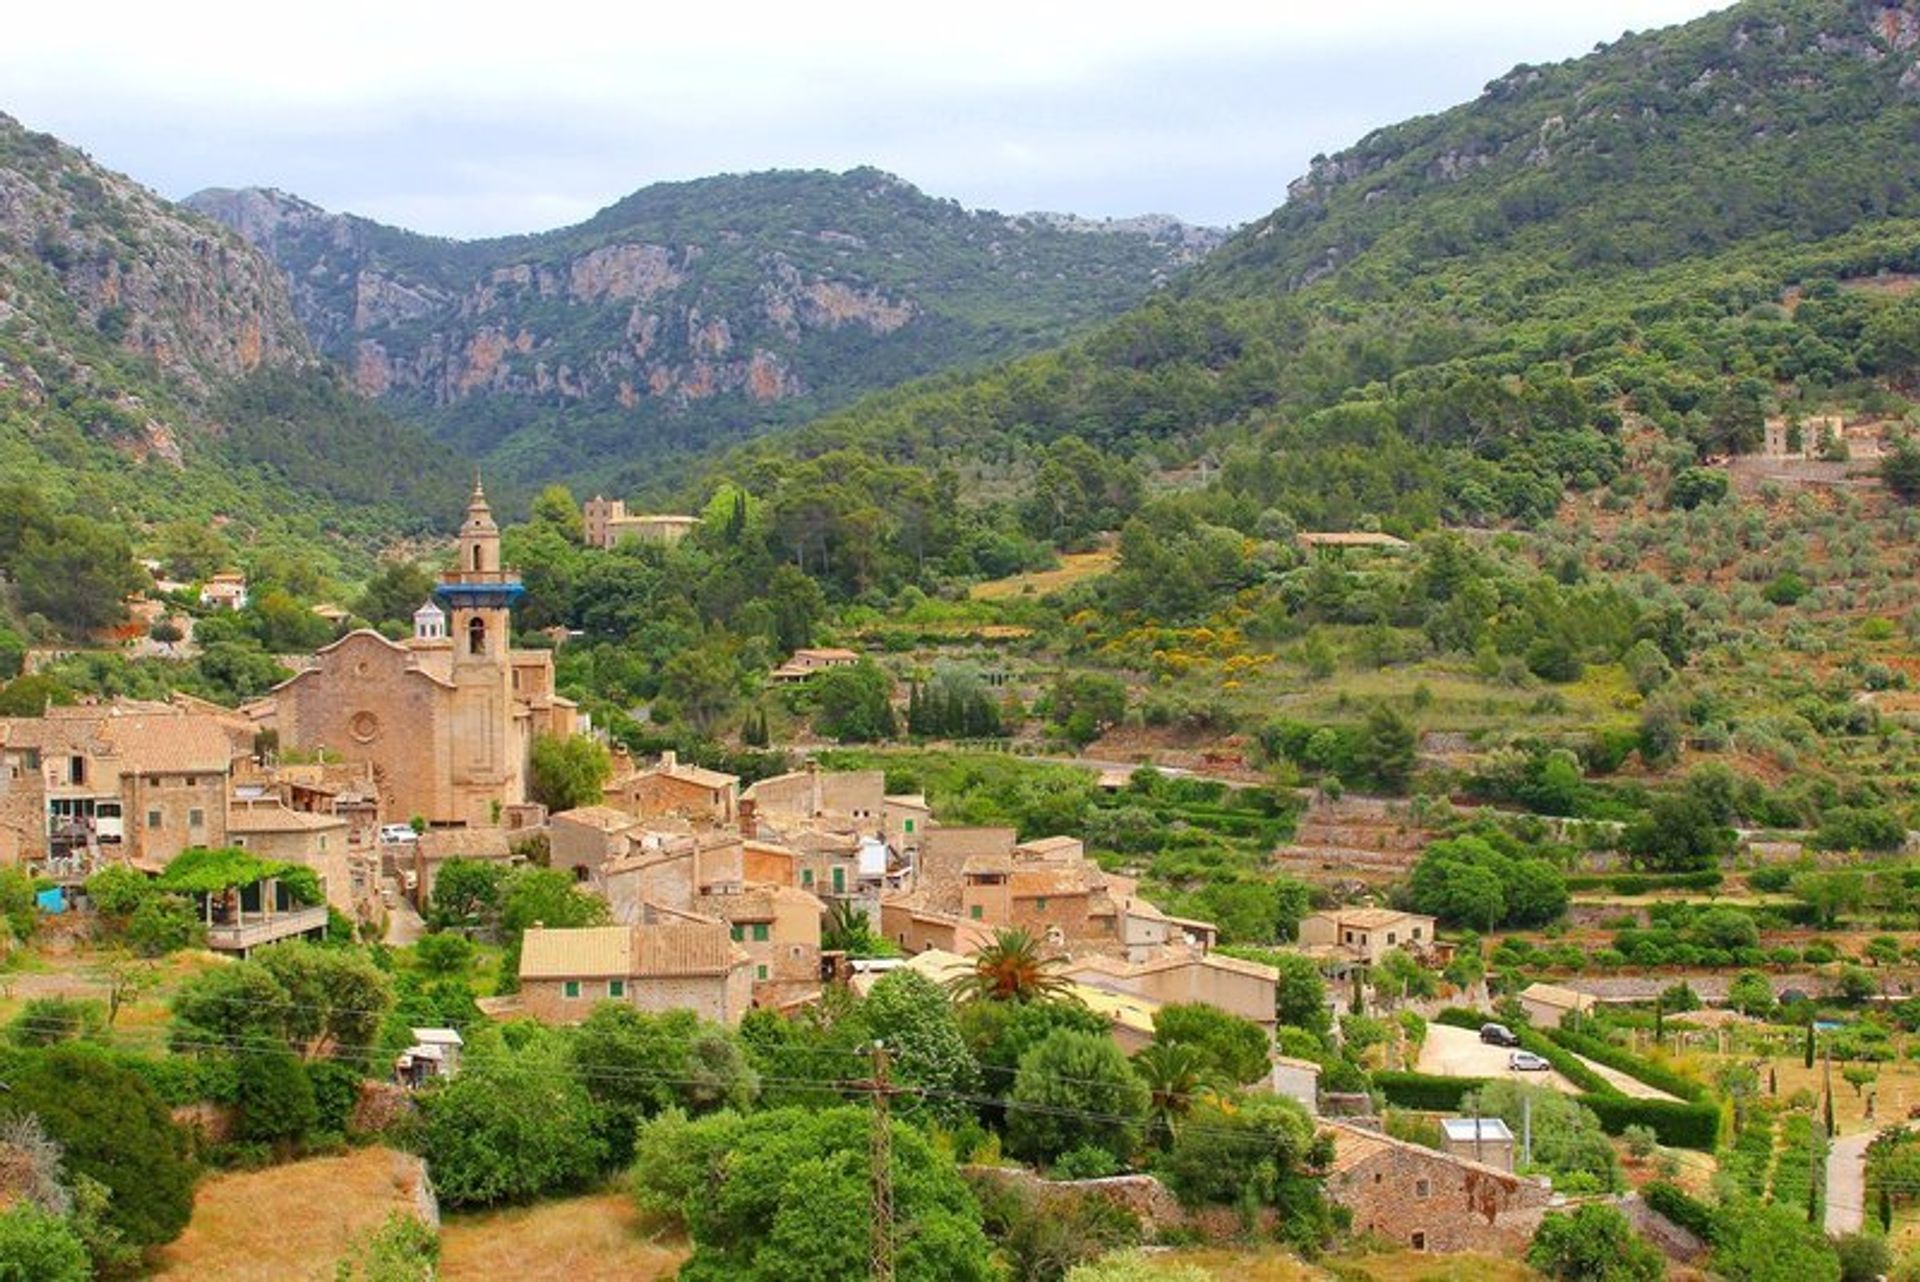 The rural village of Valldemossa in Majorca's north west region